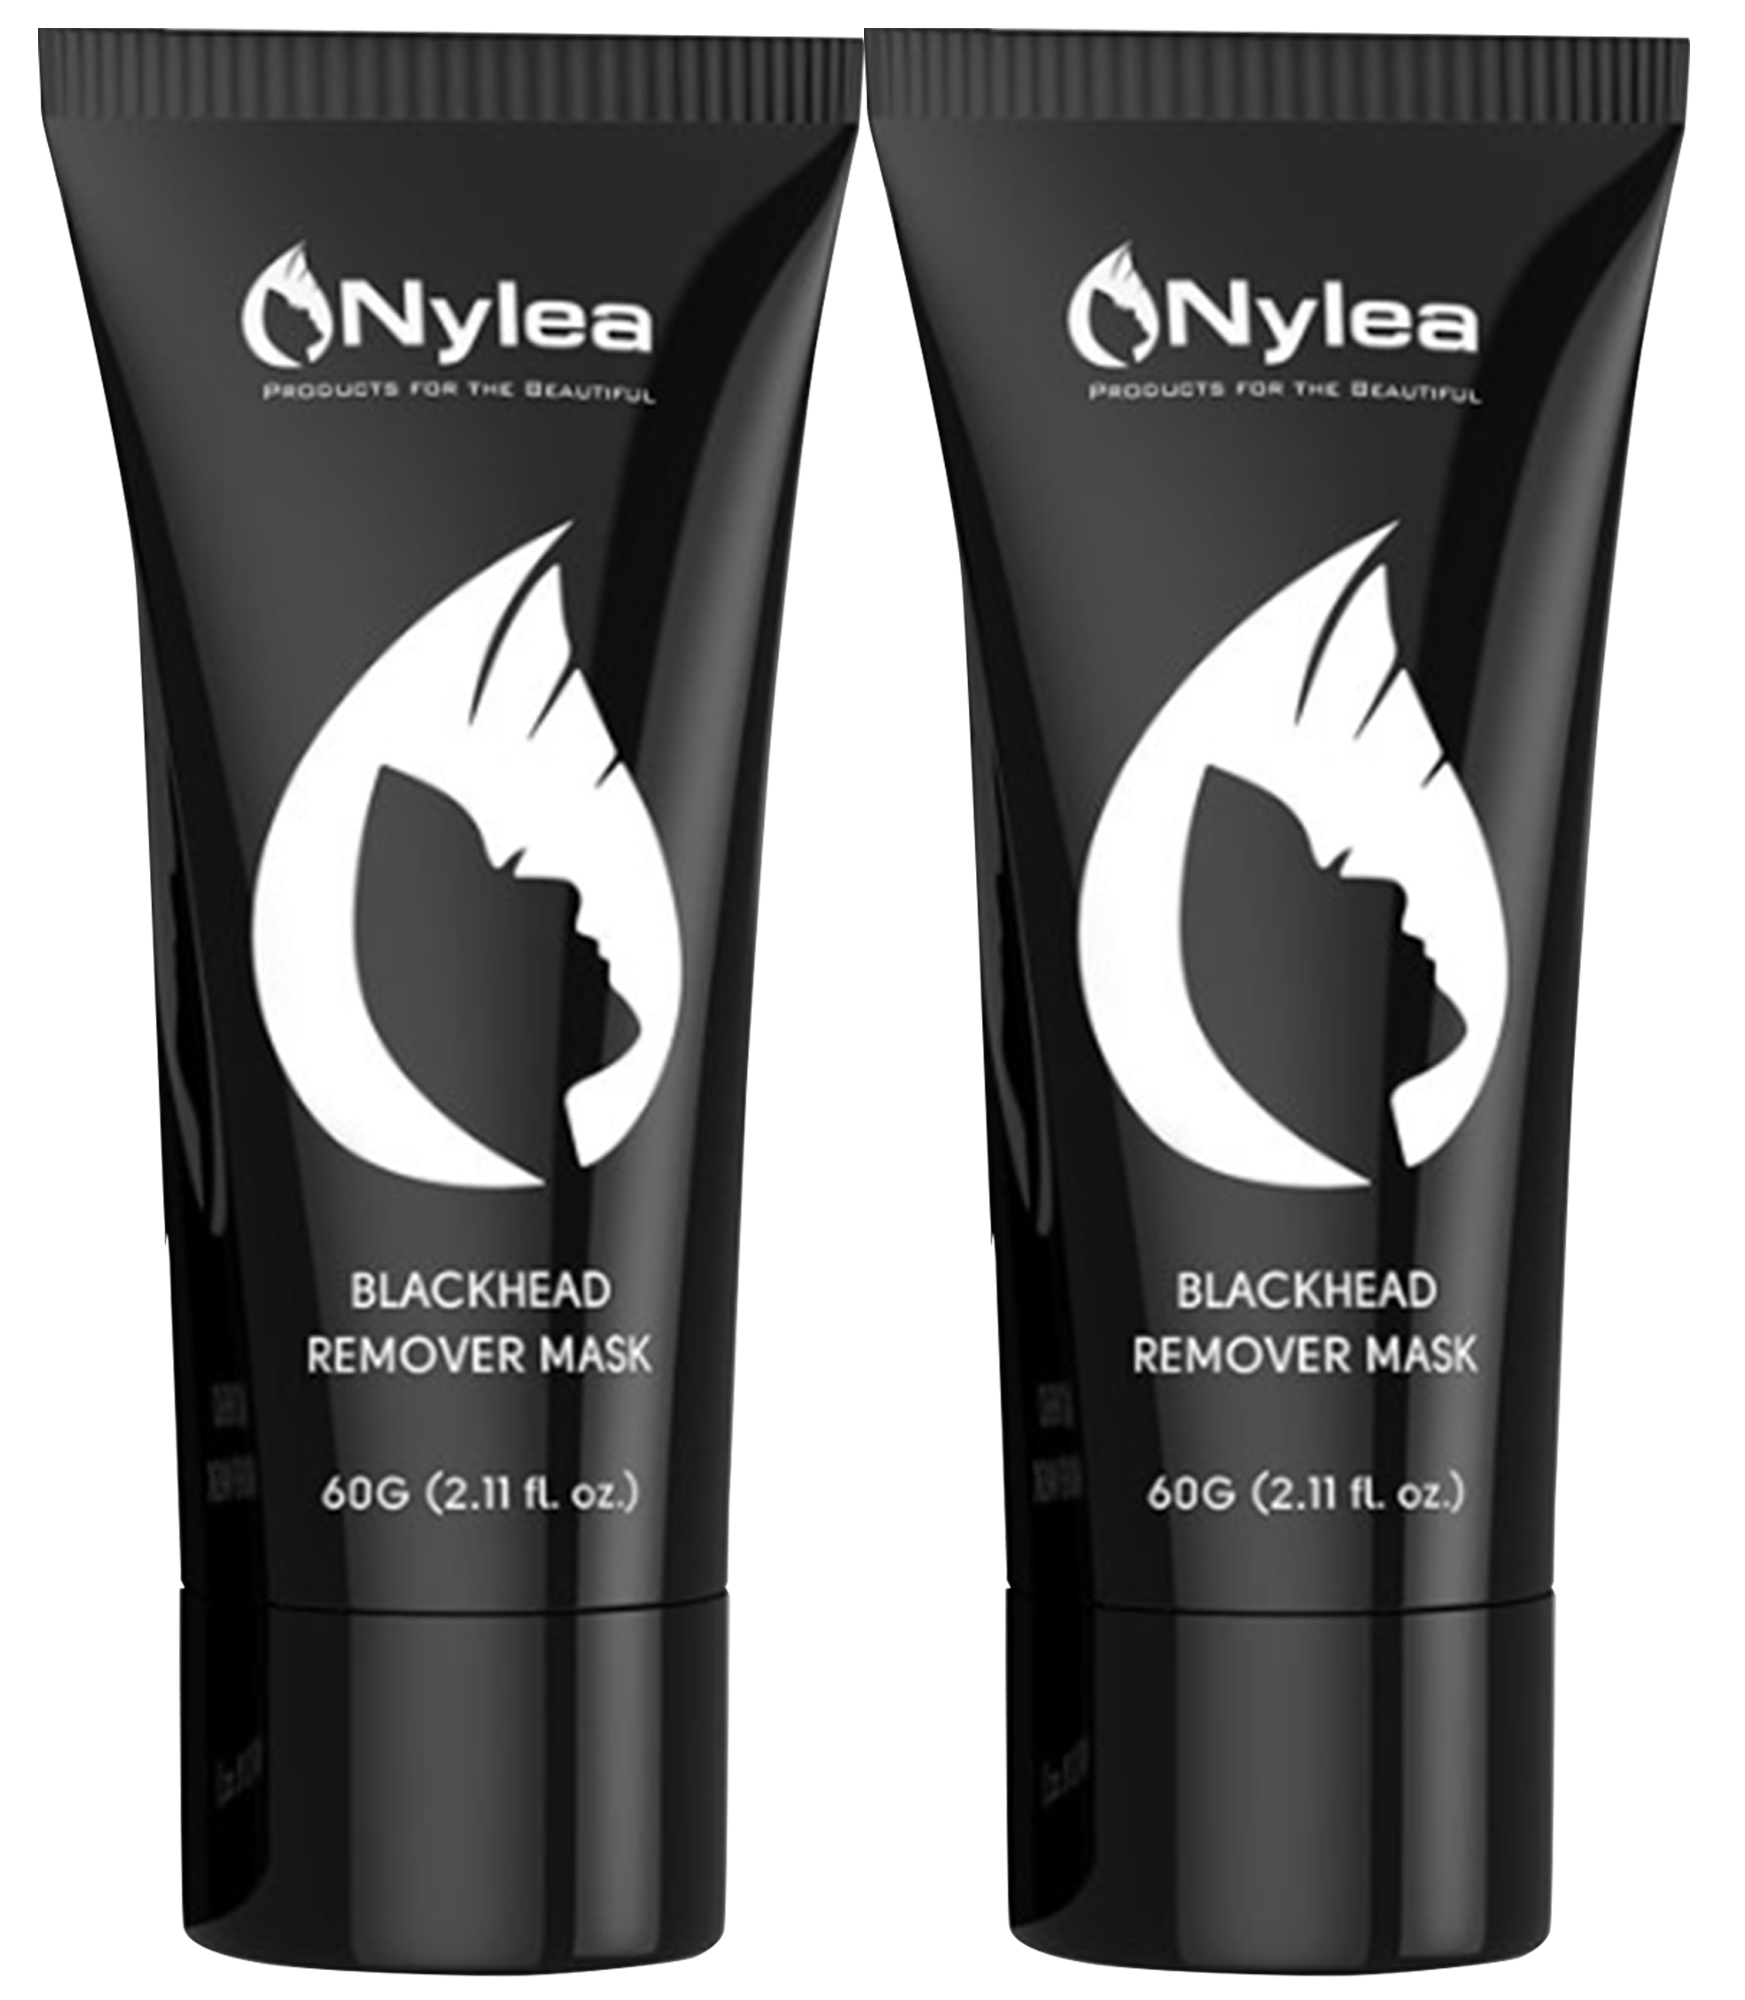 Nylea Blackhead Remover Mask Removes Blackheads - Purifying Quality Black - image 1 of 6